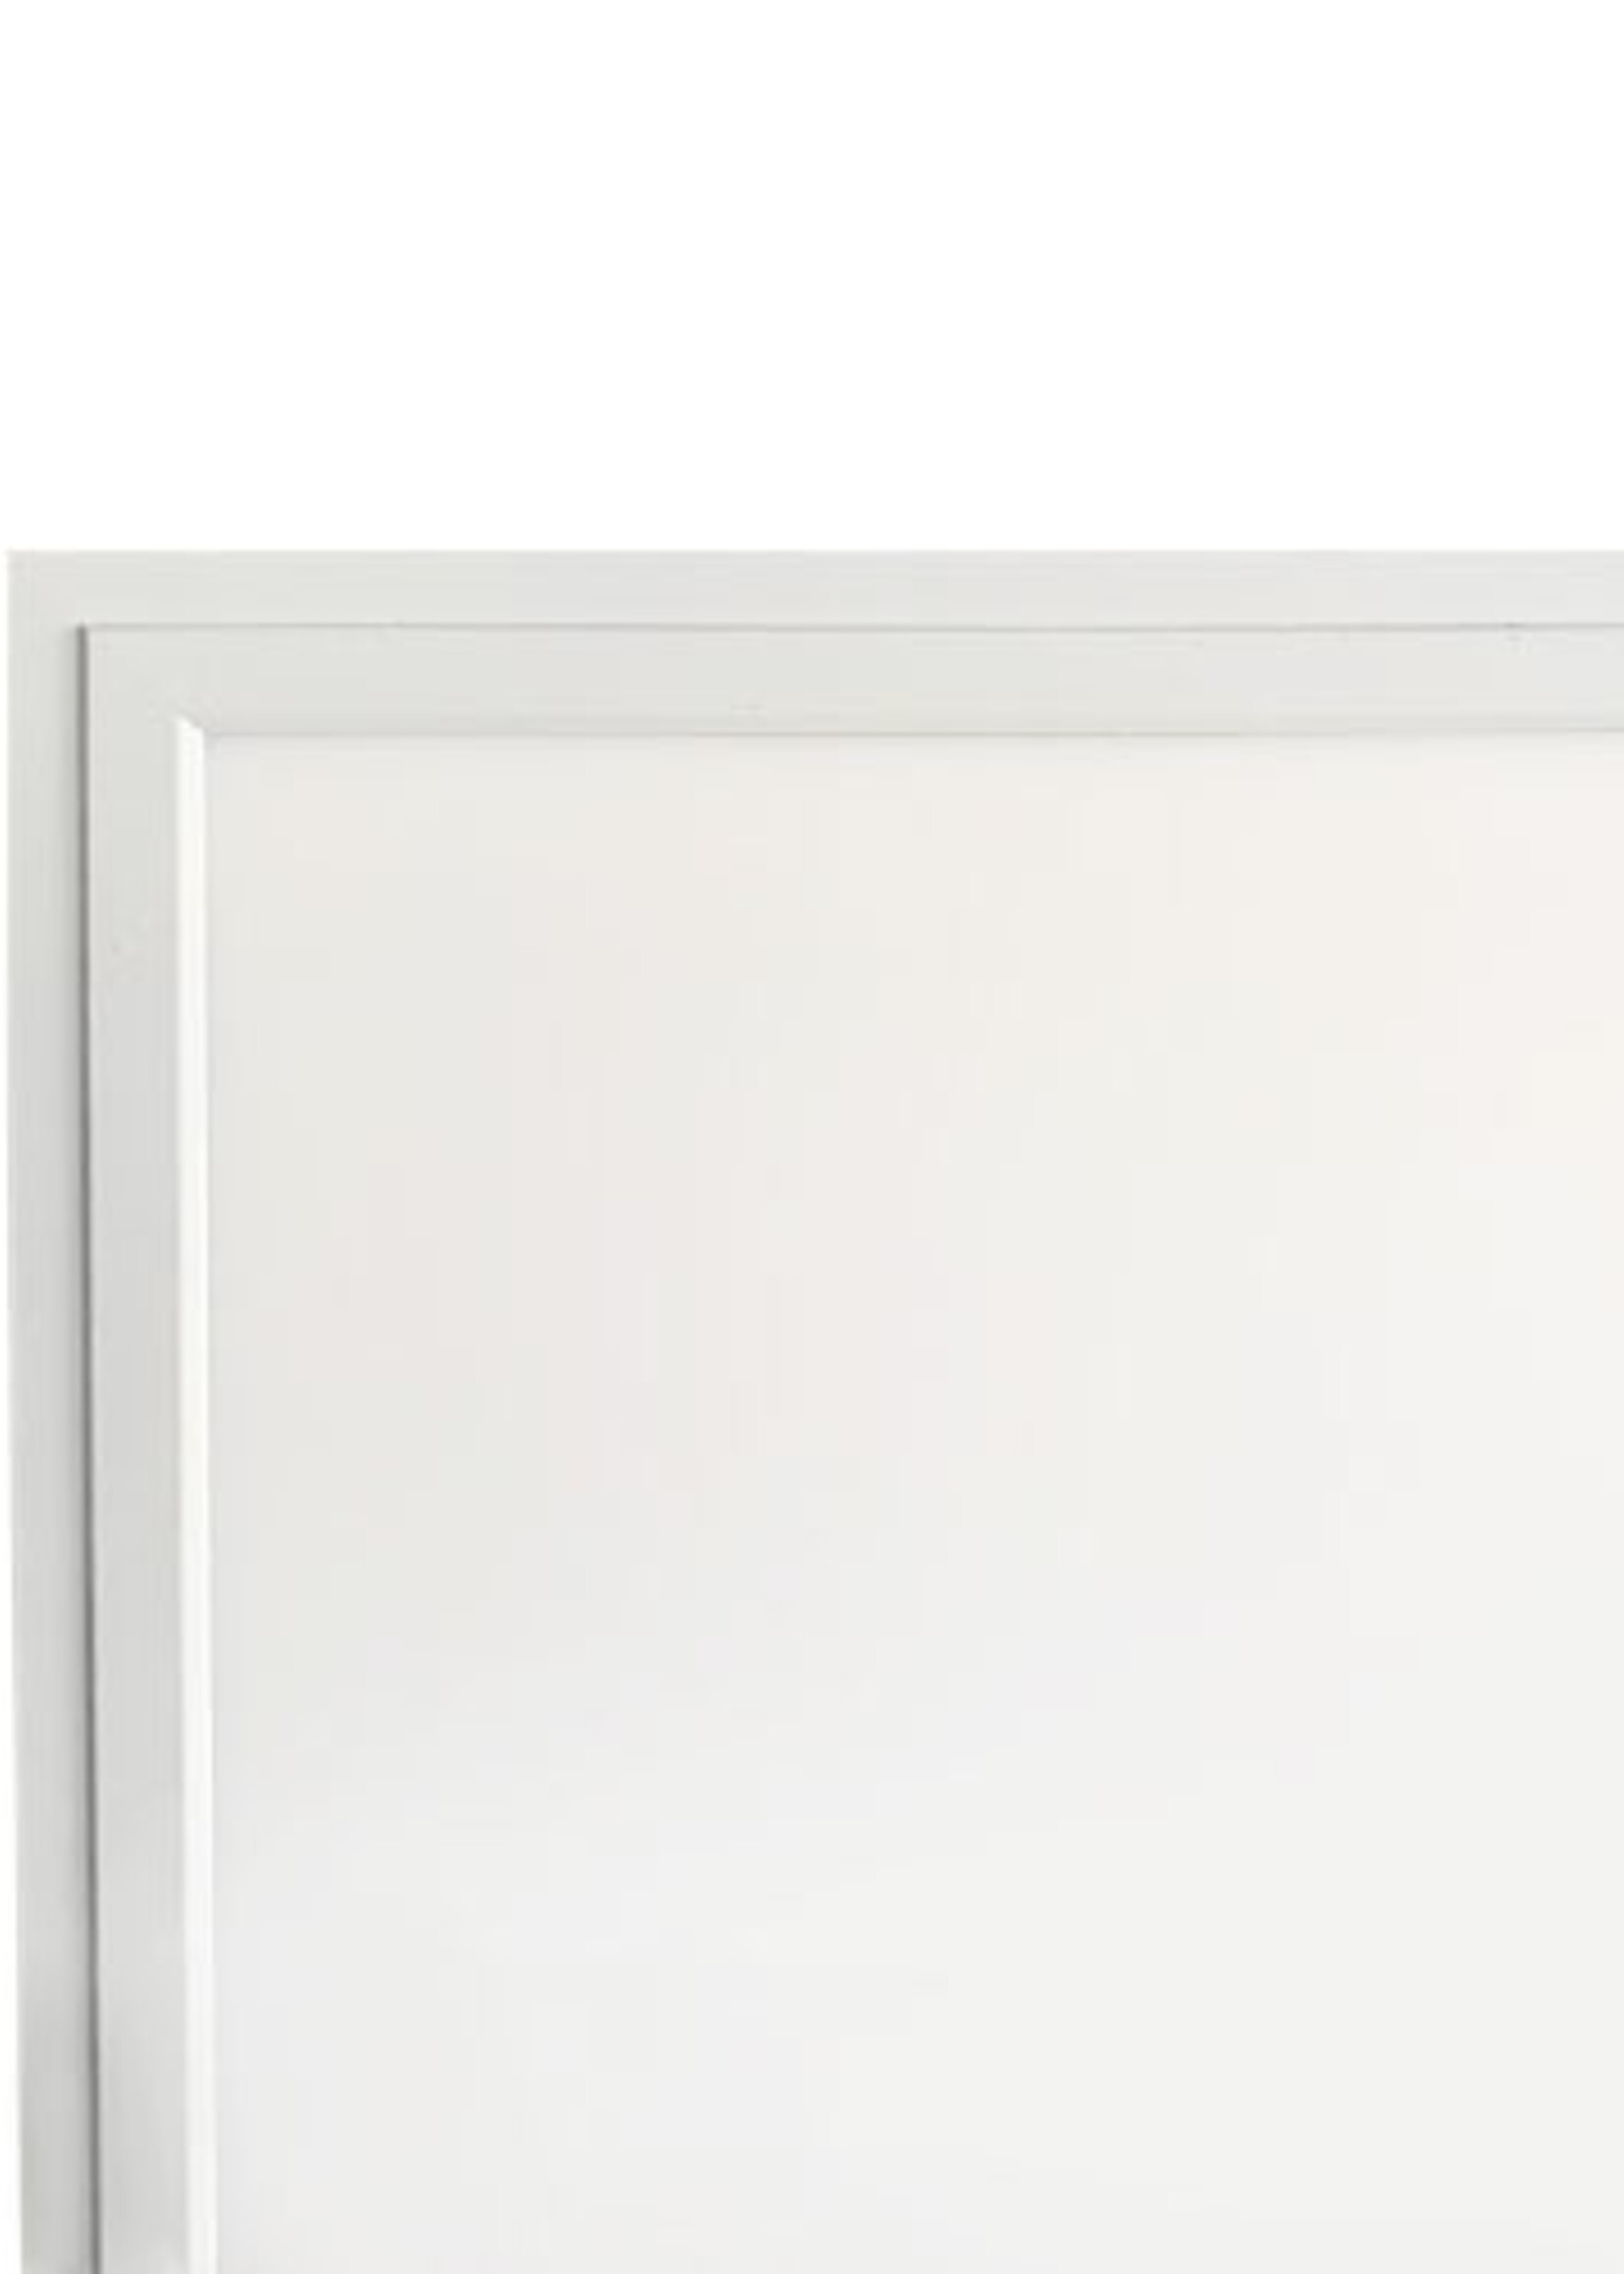 LEDWINKEL-Online LED Panel 60x60cm 36W 120lm/W High lumen Edge-lit